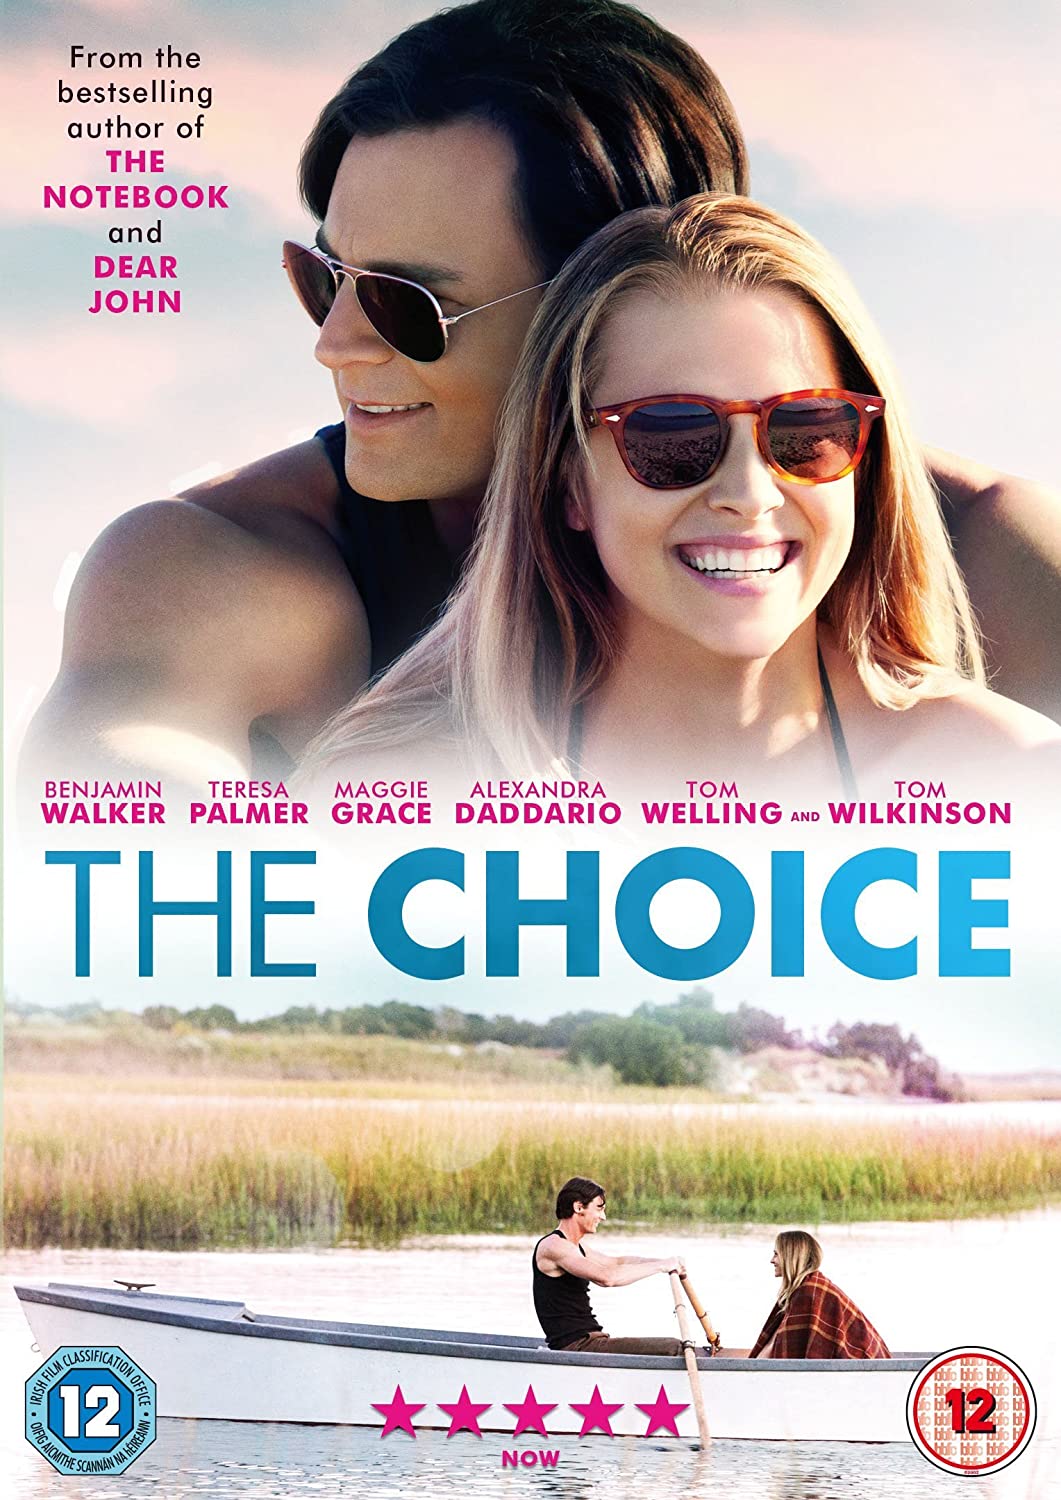 The Choice [2016] - Romance/Drama [DVD]